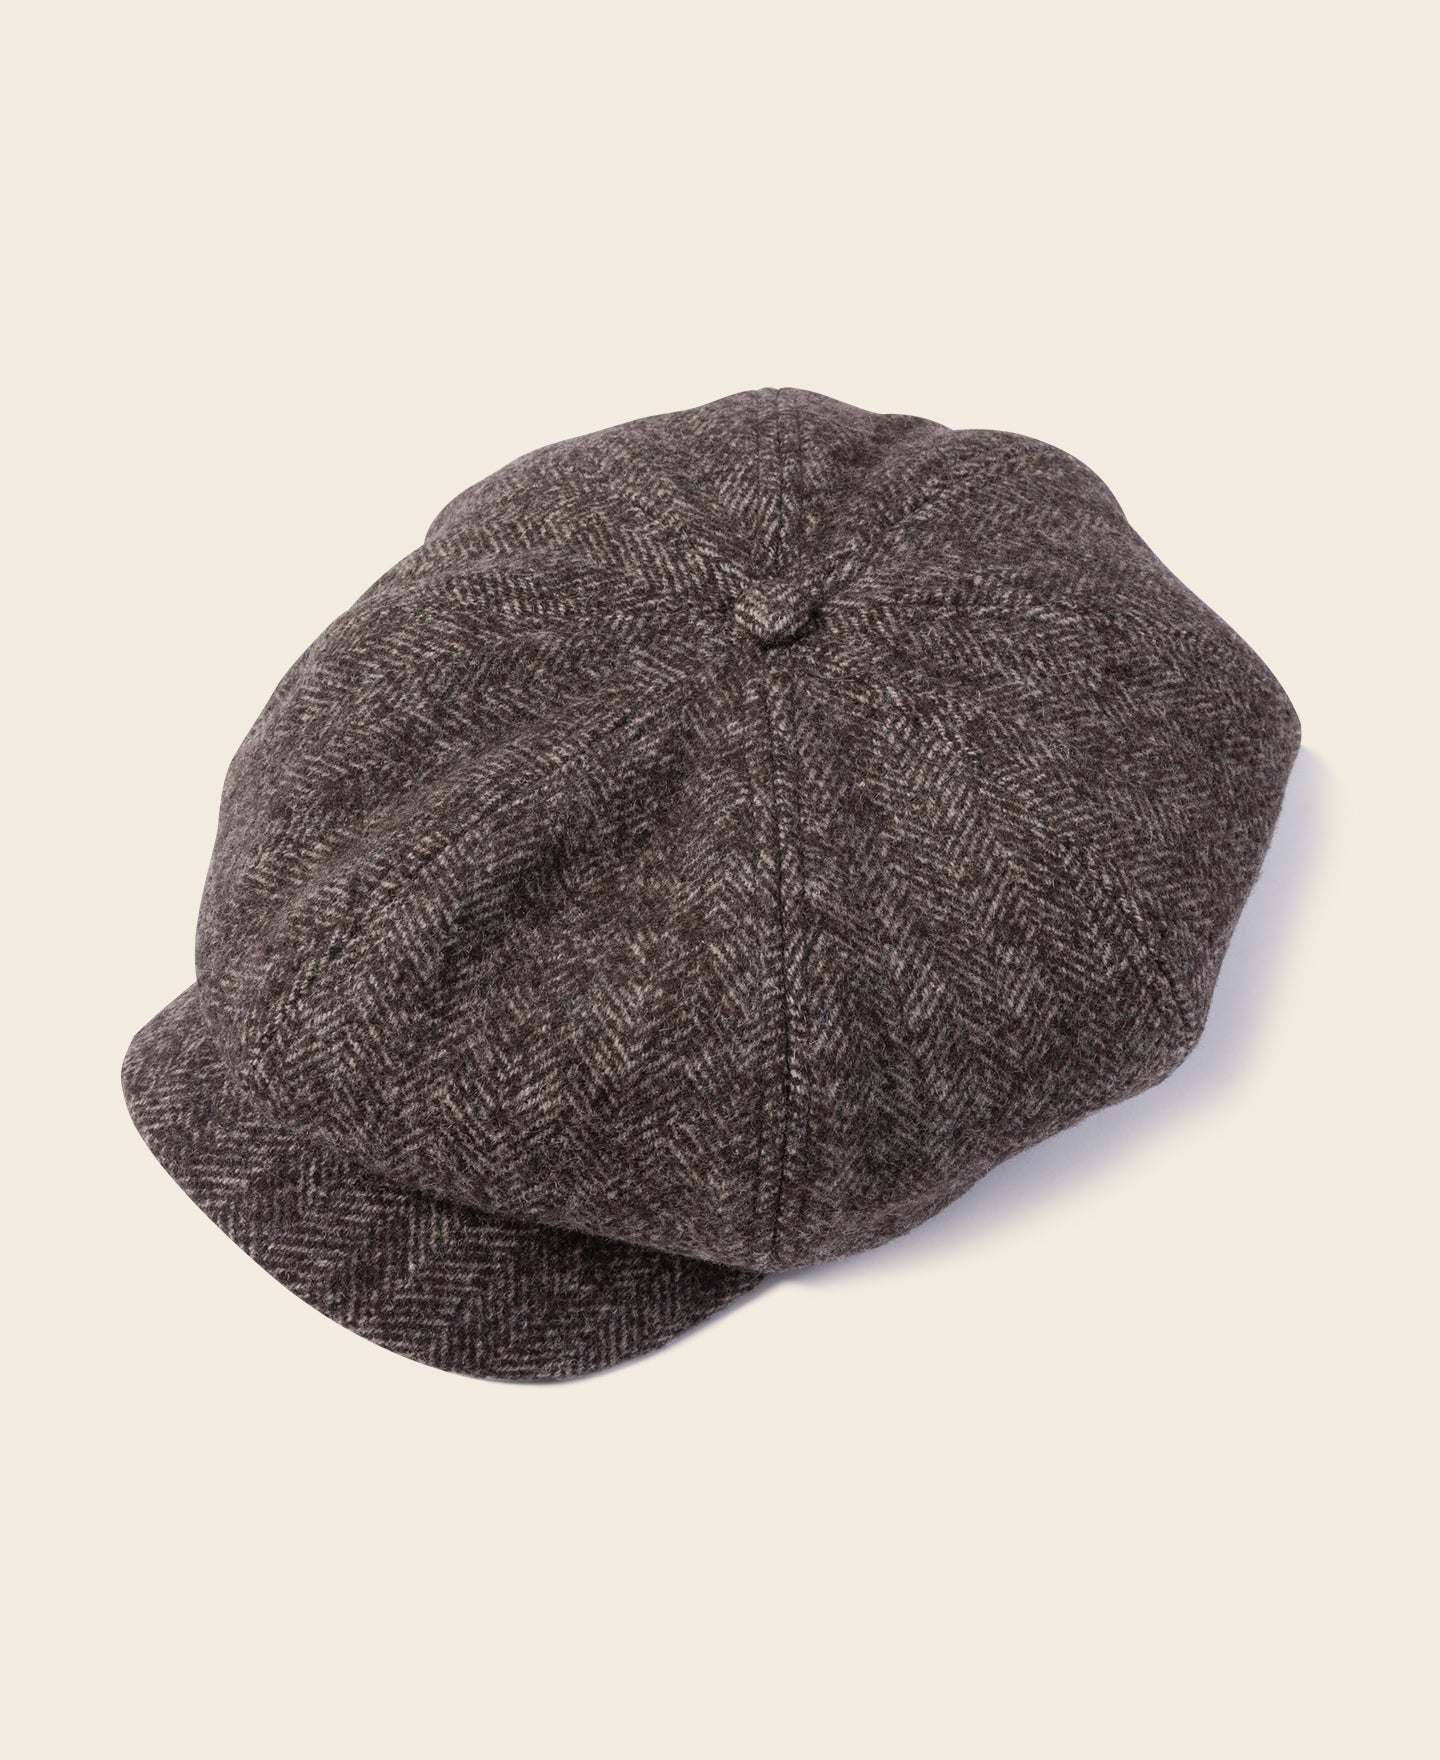 Vintage Striped Denim Newsboy Cap, Retro Bakers Boy Hat